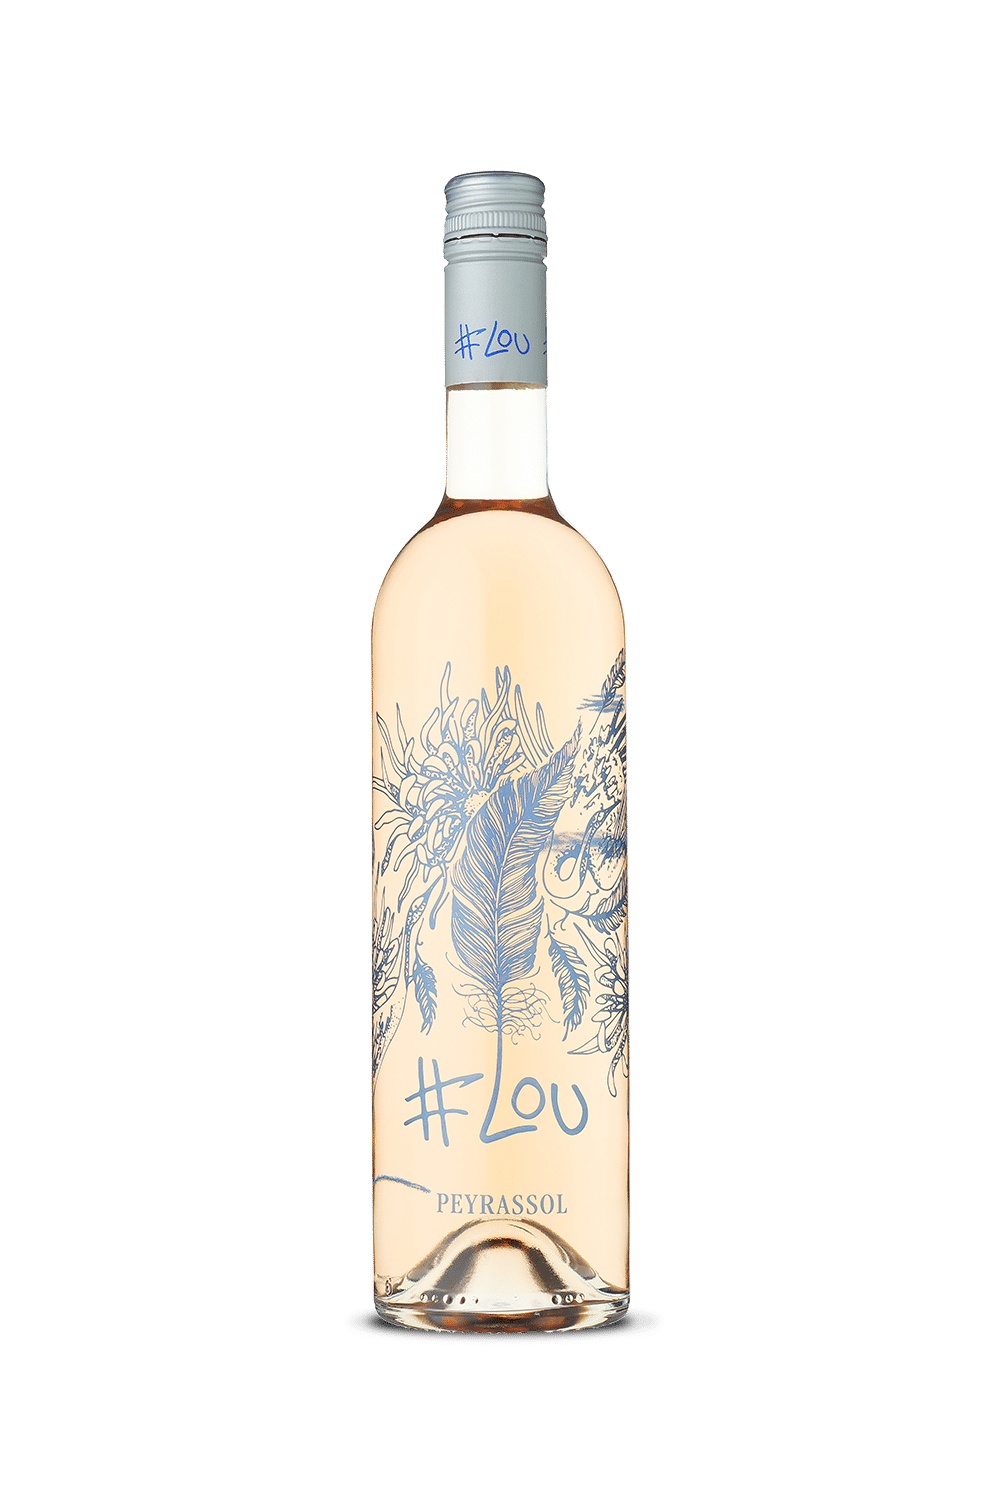 #LOU par Peyrassol, vin de marque de Provence produite par Peyrassol